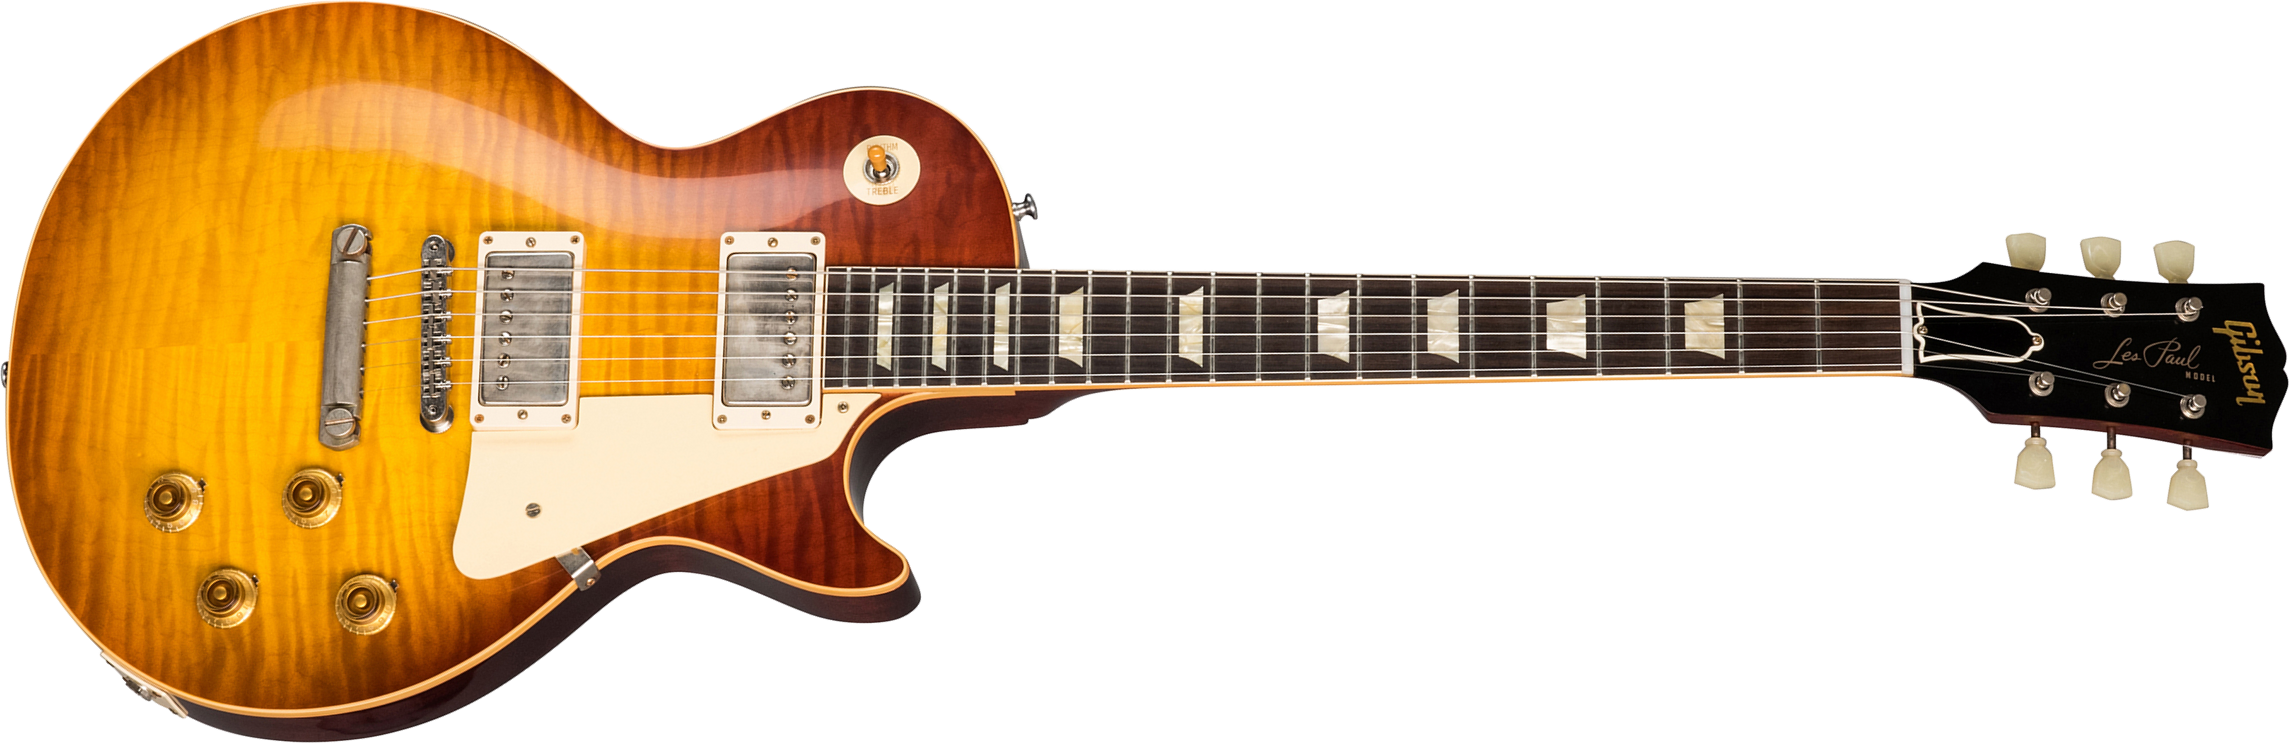 Gibson Custom Shop Les Paul Standard 1959 60th Anniversary Bolivian Rw - Vos Orange Sunset Fade - Single cut electric guitar - Main picture